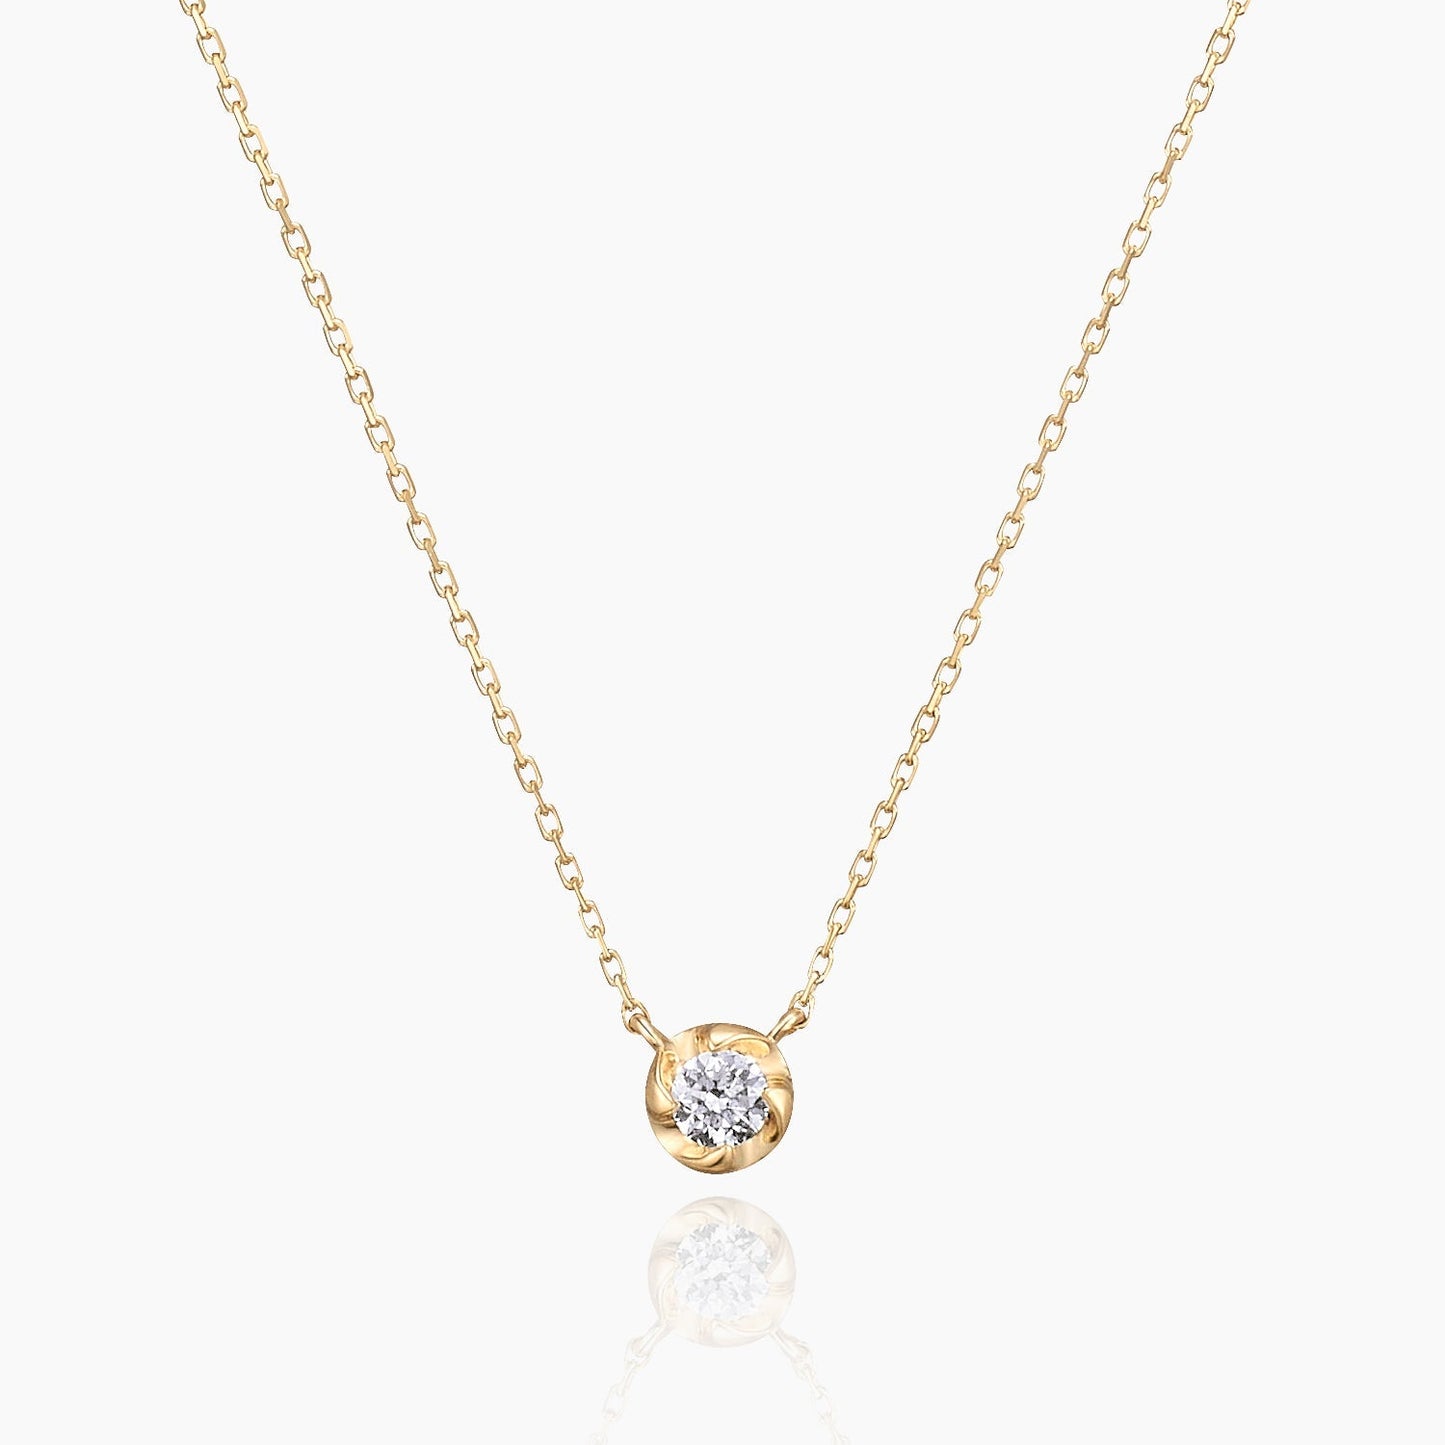 Barry バリー ネックレス 宝石は天然ダイヤモンド 0.05ct 素材はK10のピンクゴールド 商品番号MA35 正面